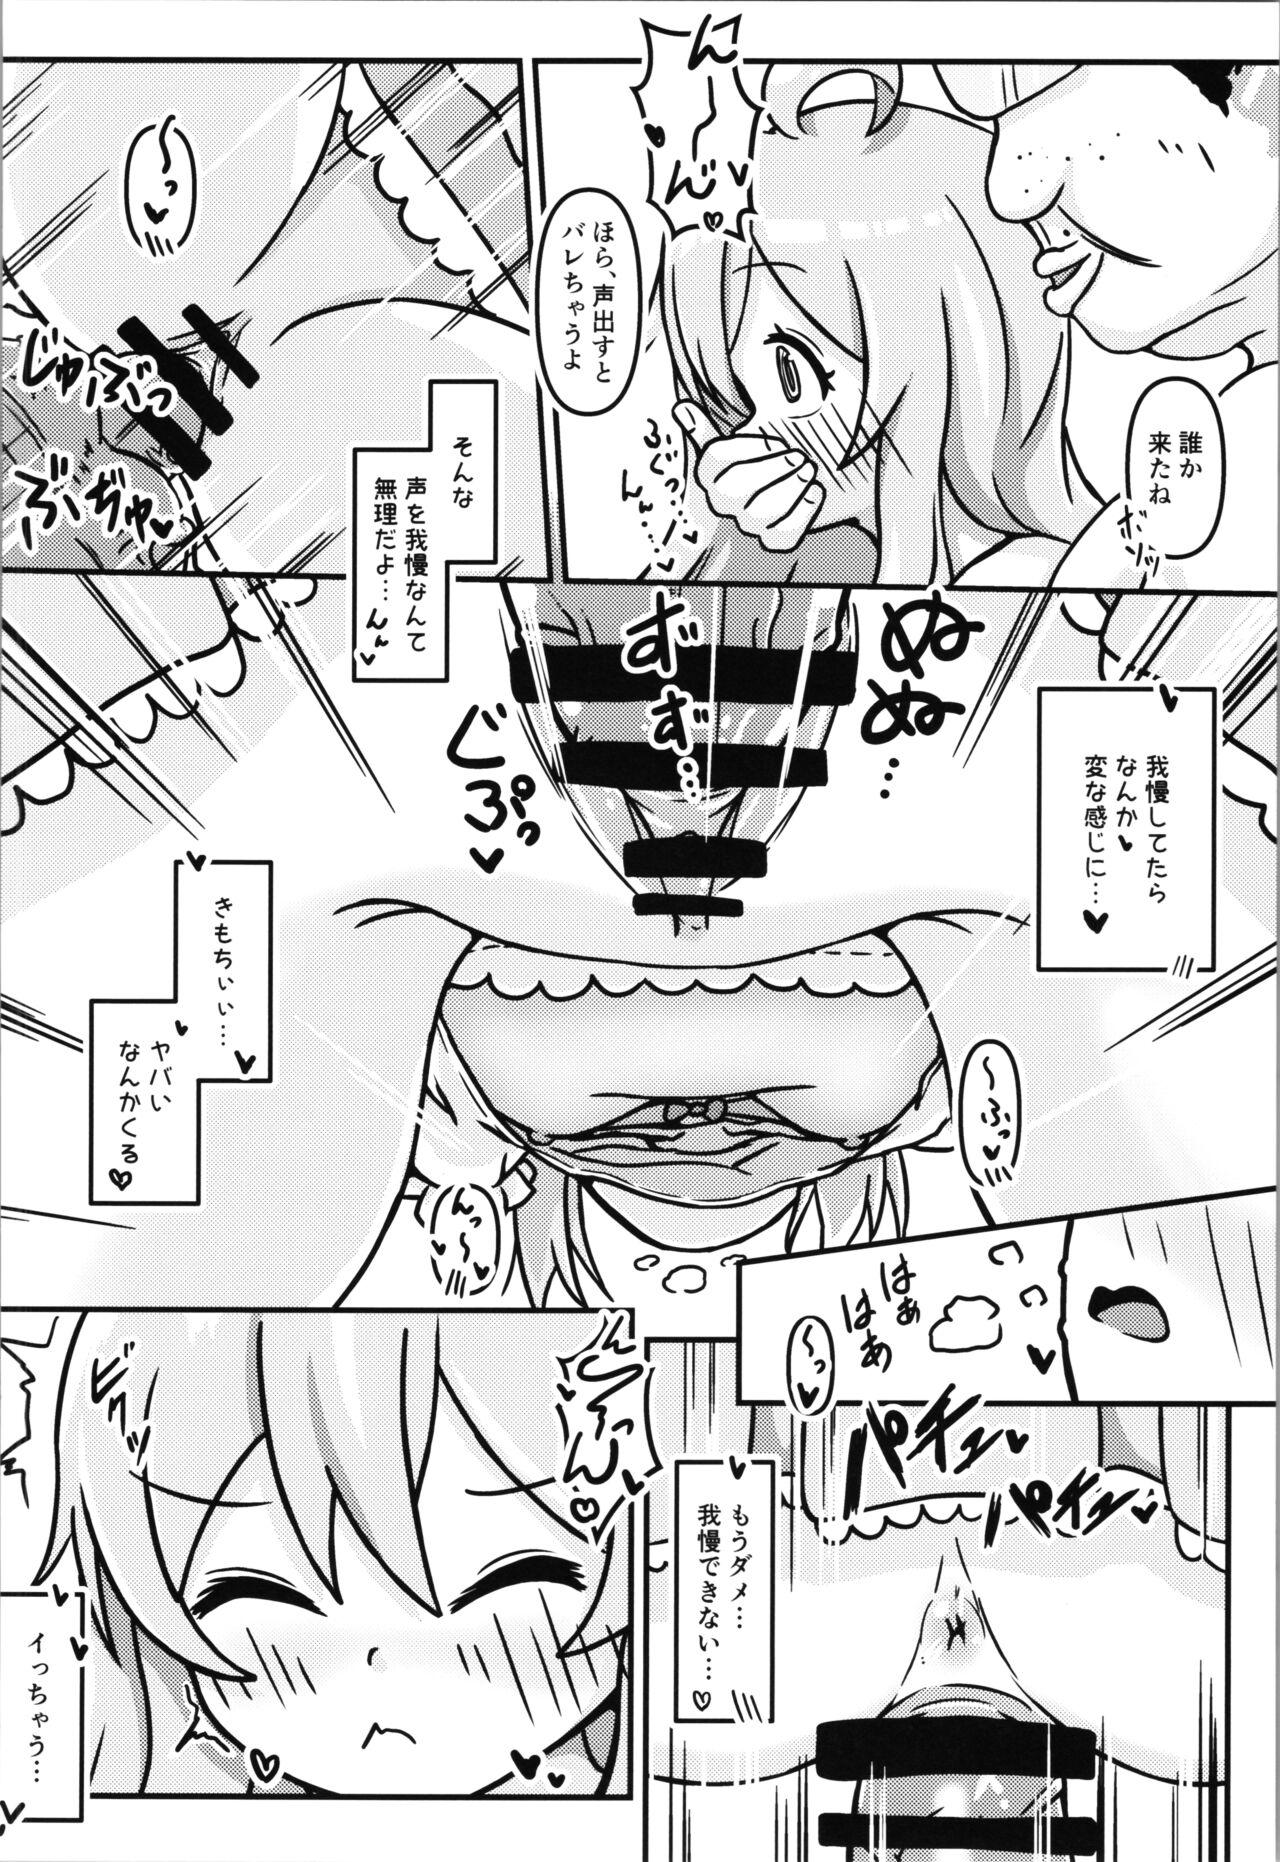 Mahiro-chan's bouncy ××× experience 19